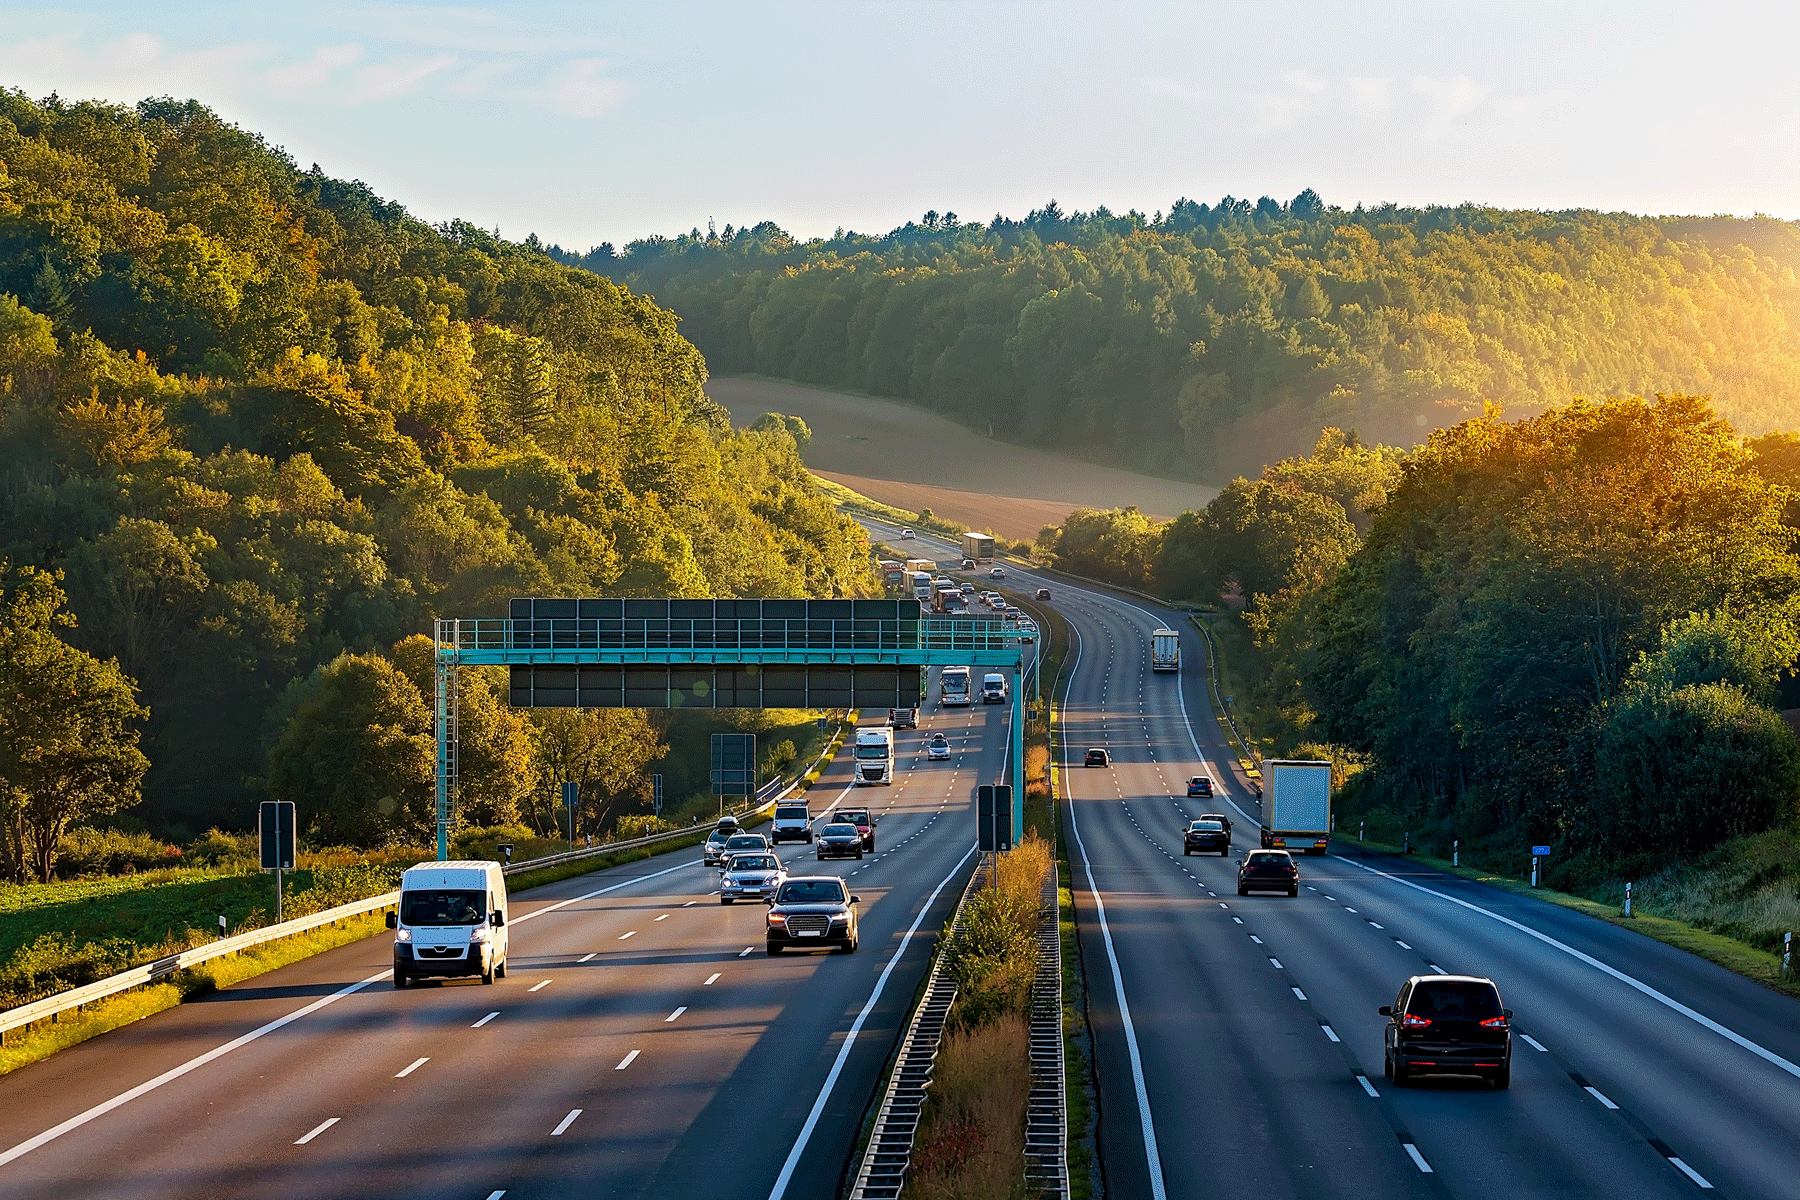 Autobahns na Alemanha